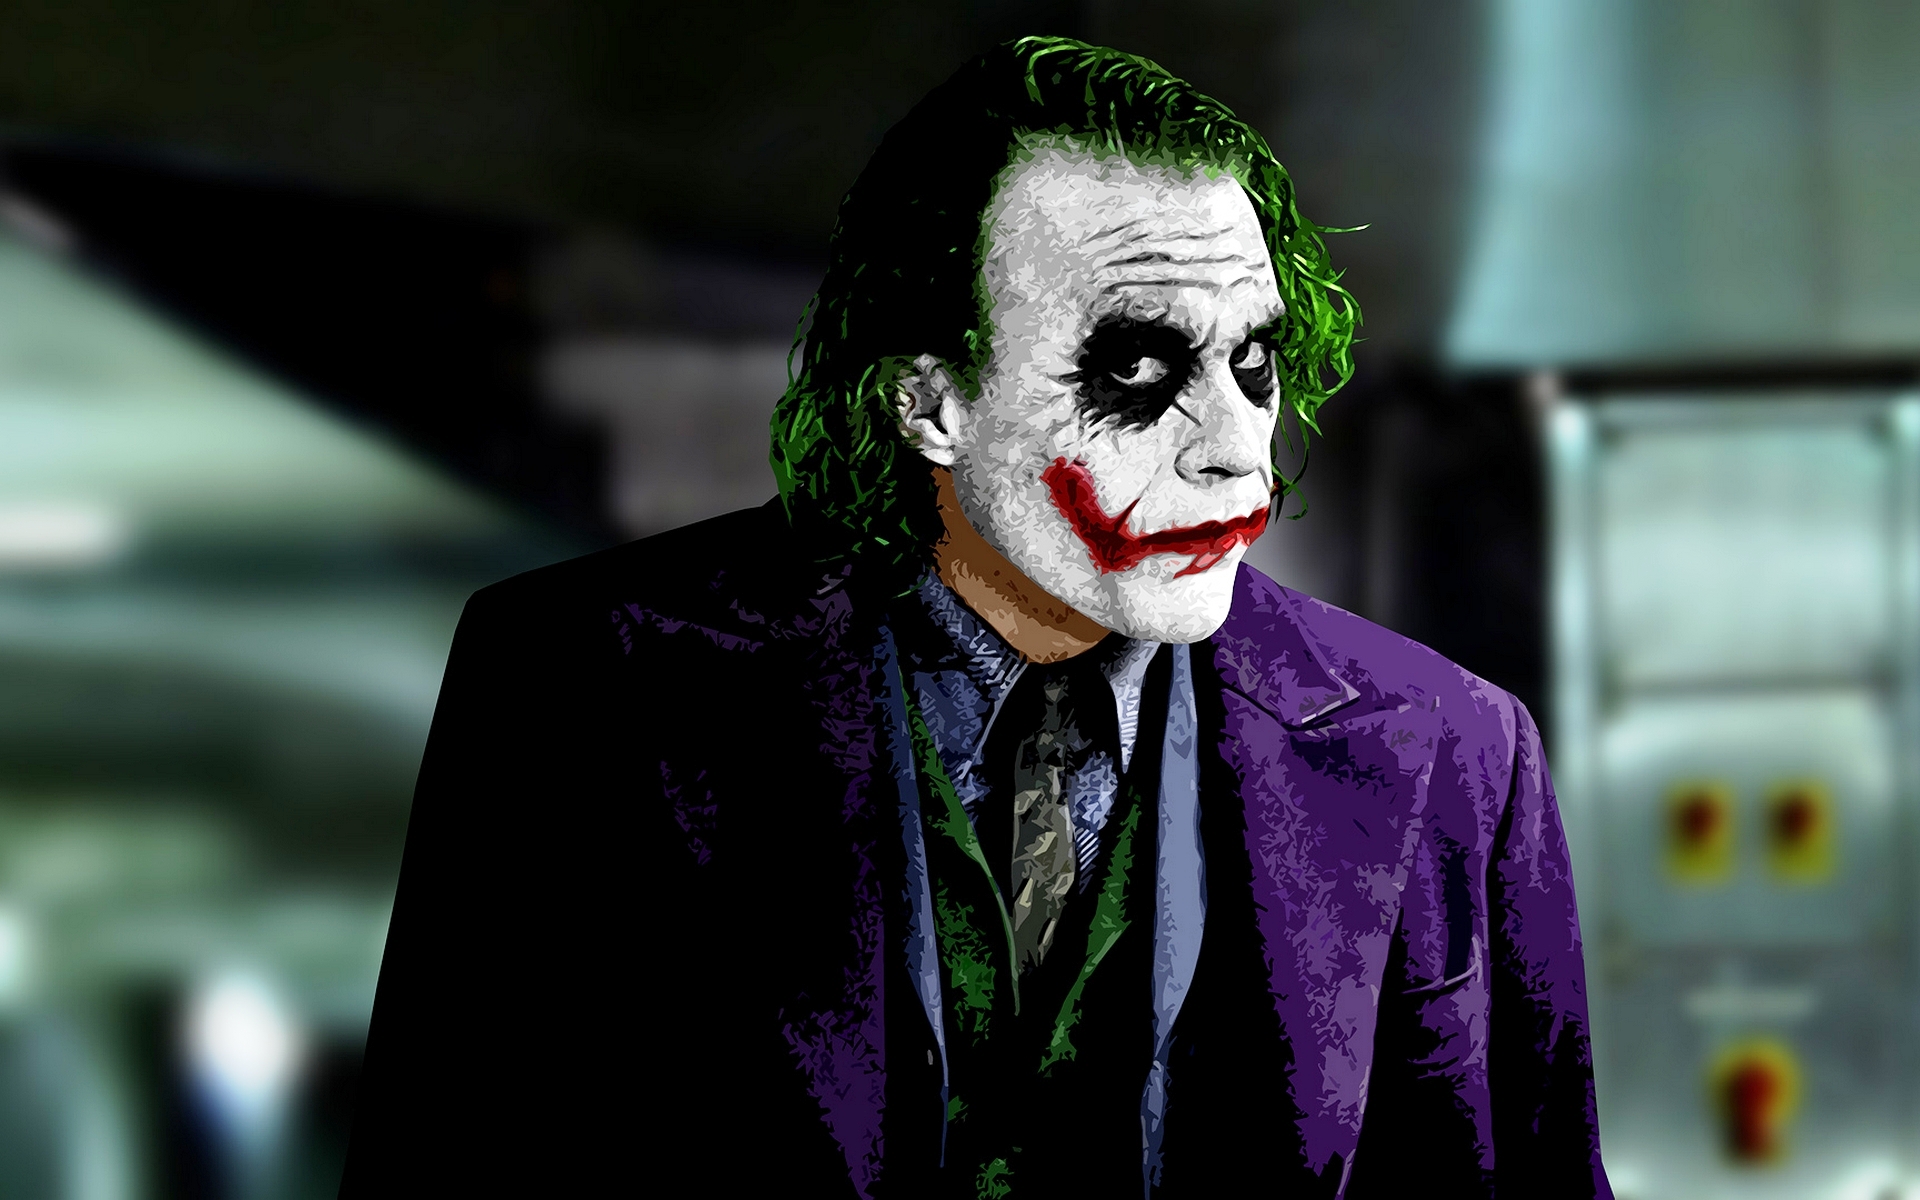 The Joker Wallpaper Pictures Image